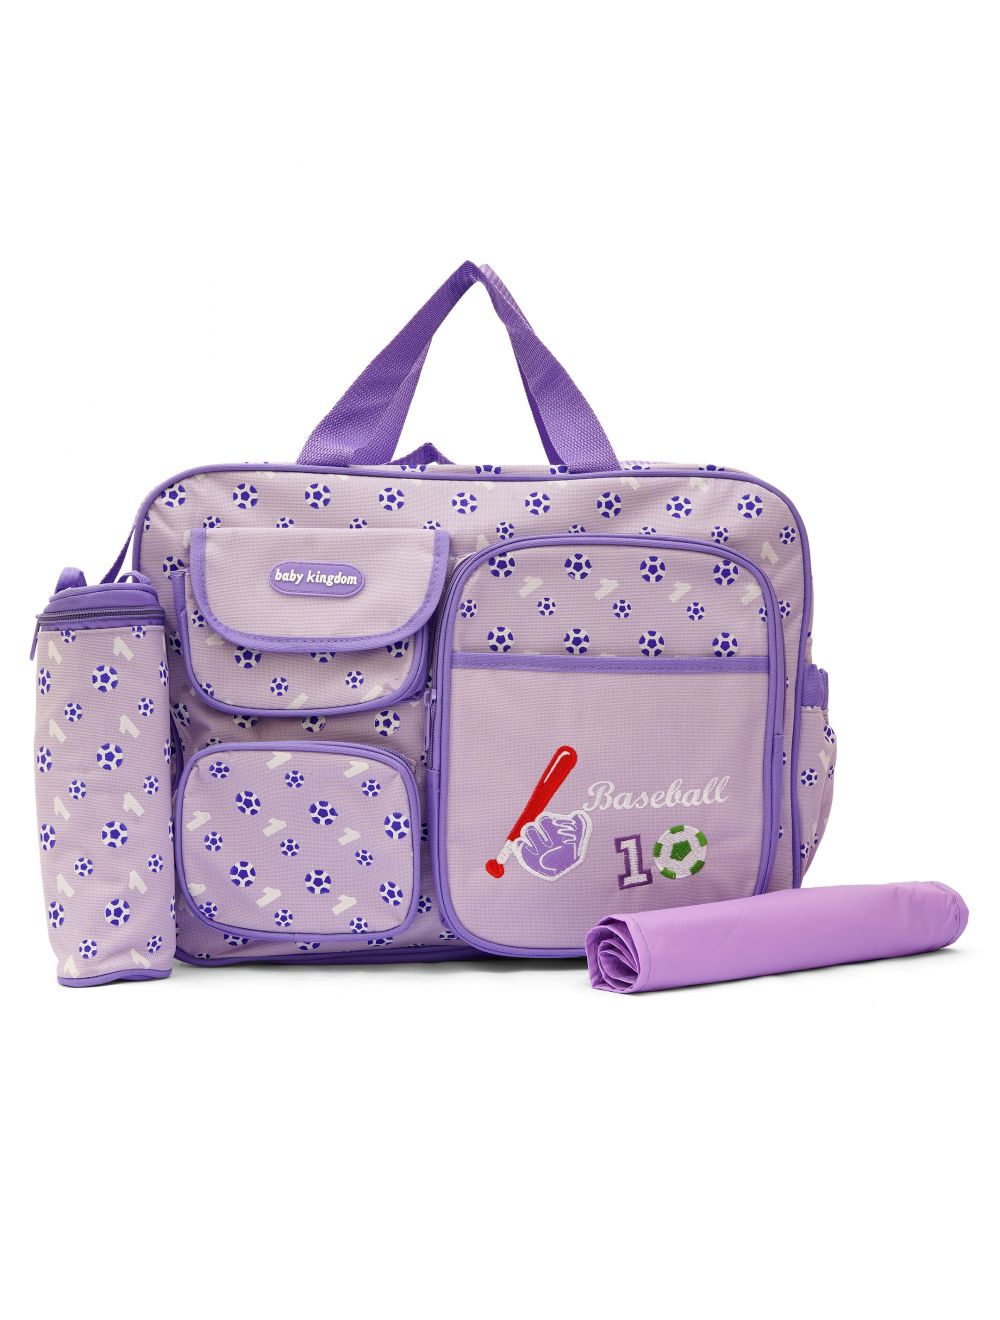 Little Sparks Diaper Bag Baby Kingdom Purple